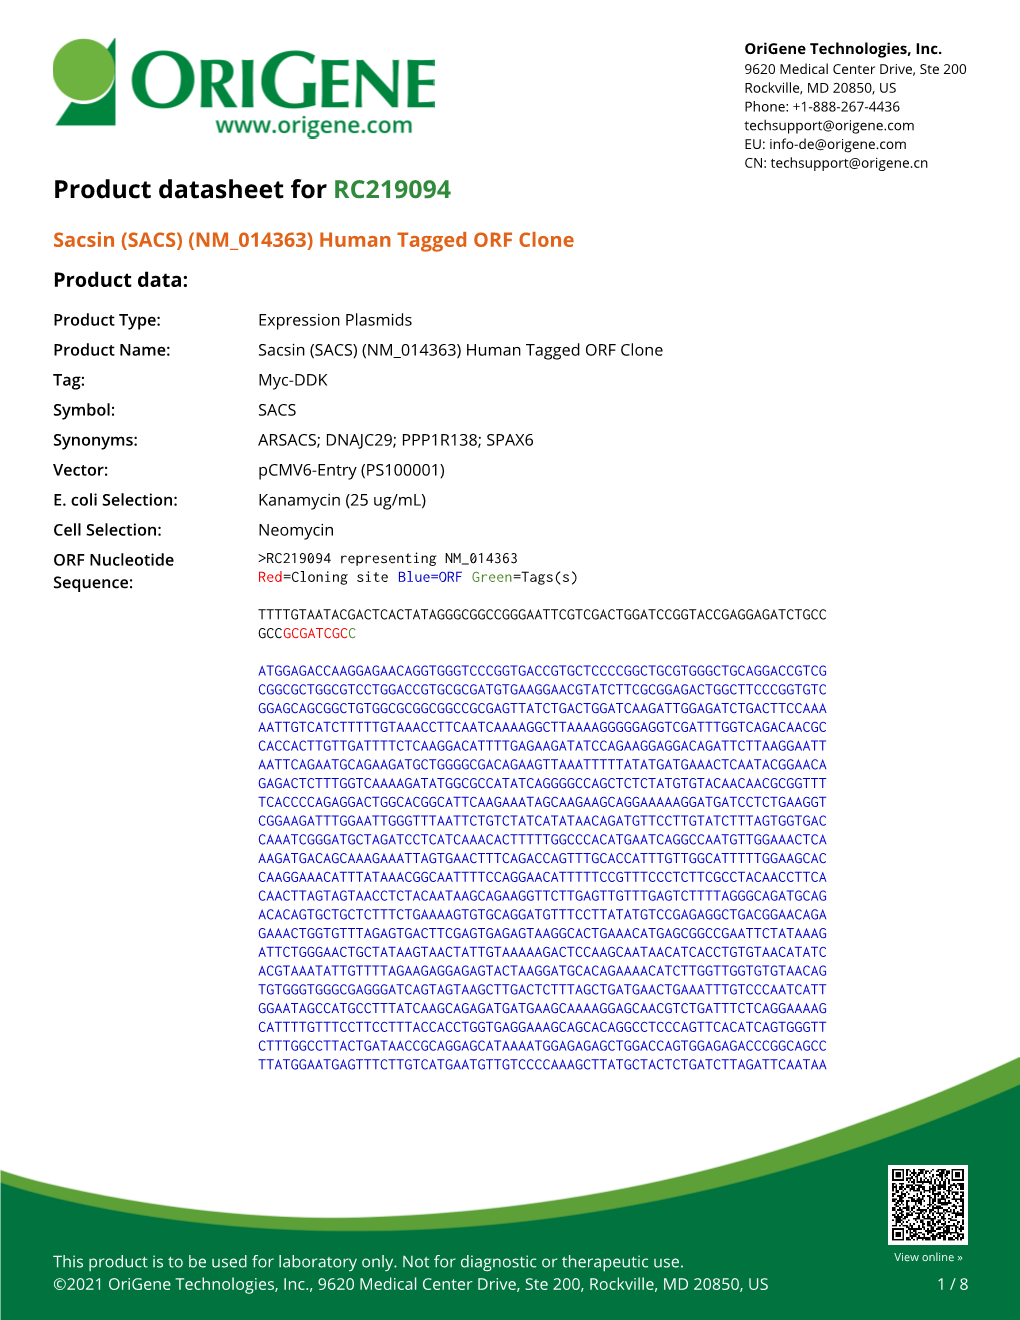 Sacsin (SACS) (NM 014363) Human Tagged ORF Clone – RC219094 | Origene